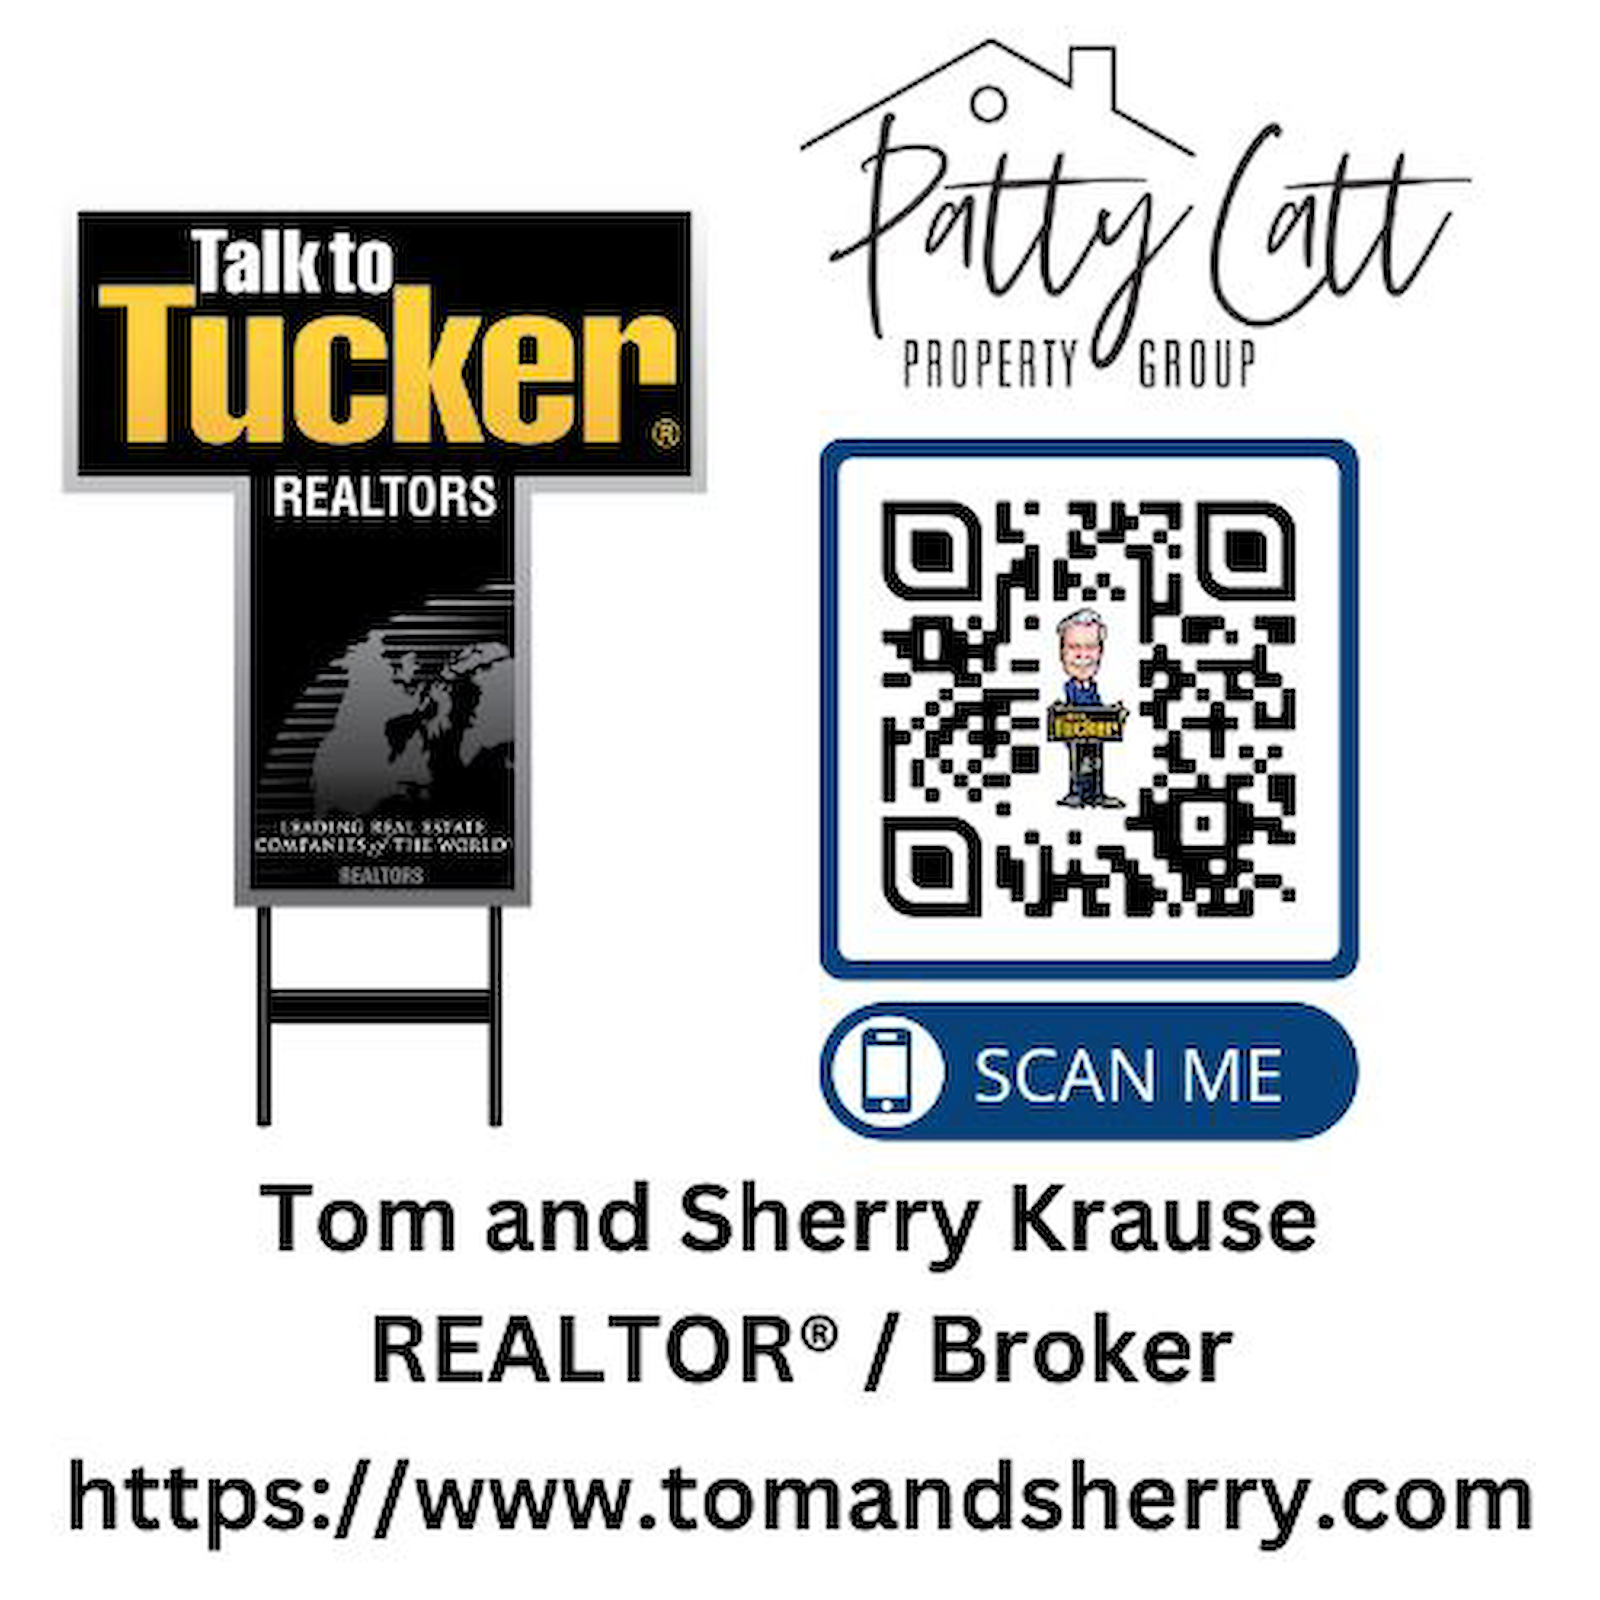 Tom and Sherry Krause REALTOR / Broker